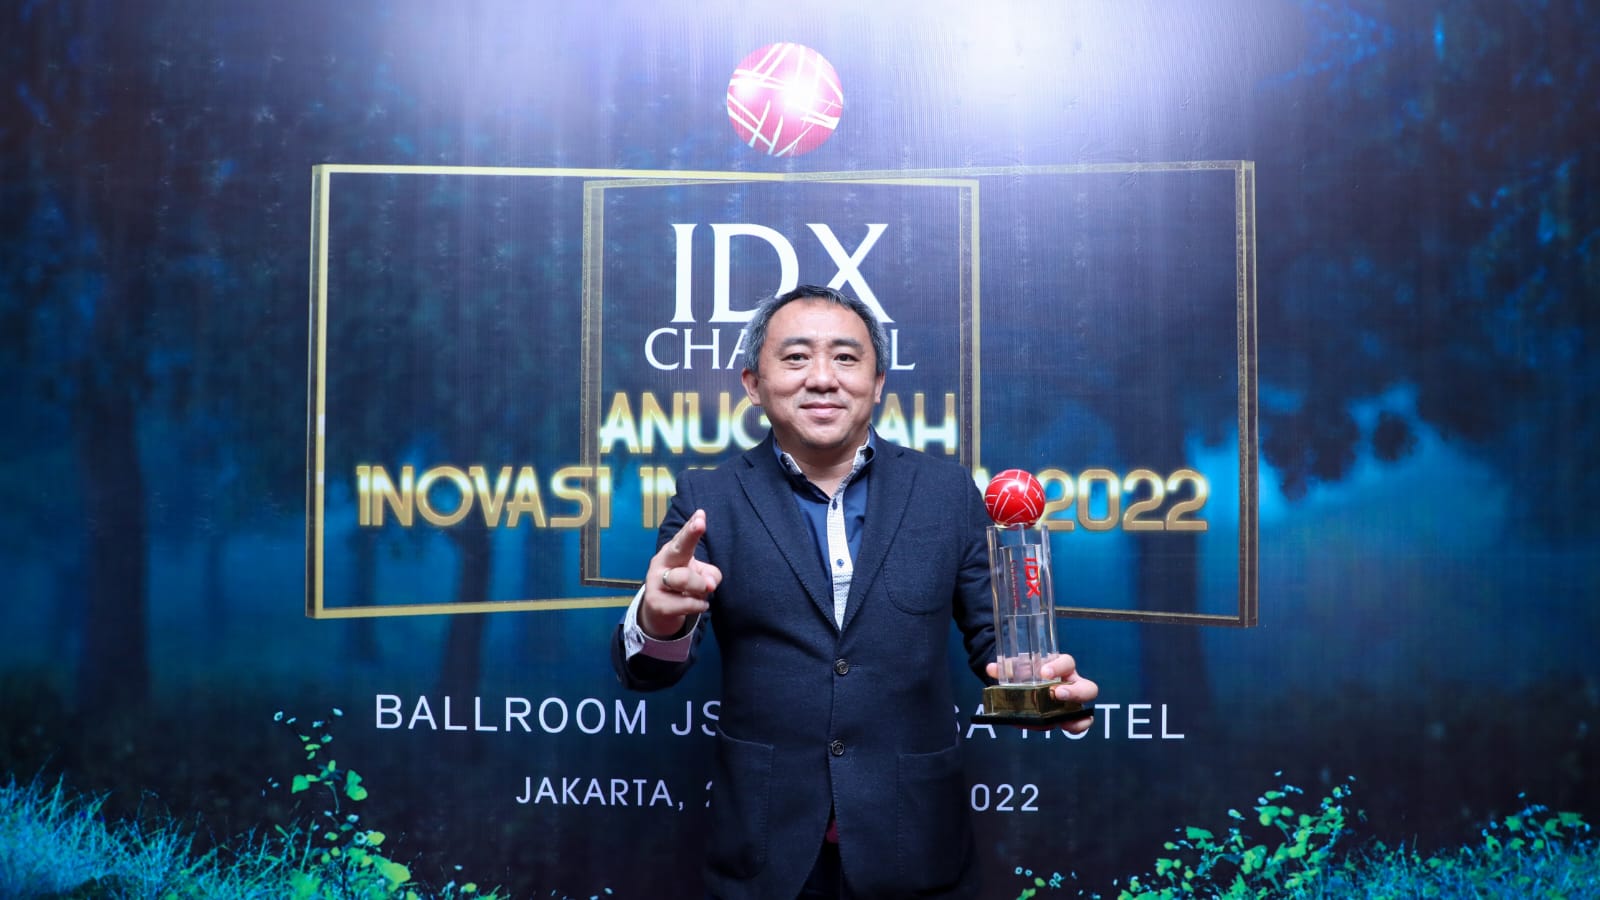 Platform “MyDigiLearn” Milik Telkom Raih Penghargaan Utama Anugerah Inovasi Indonesia IDX Channel 2022